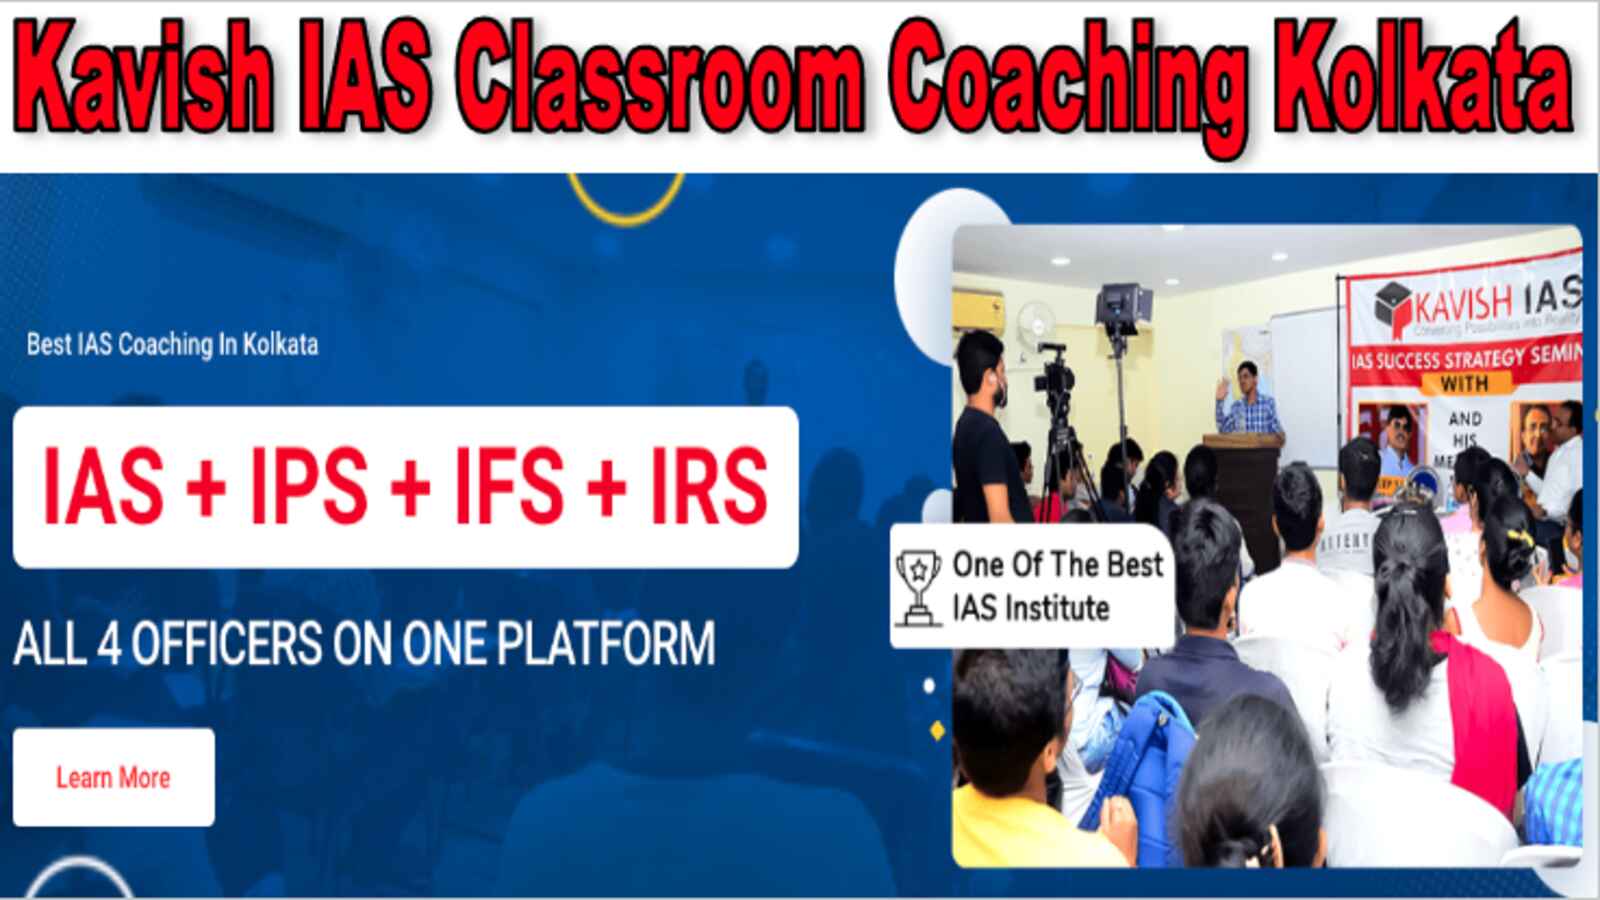 Kavish IAS Classroom Coaching Kolkata